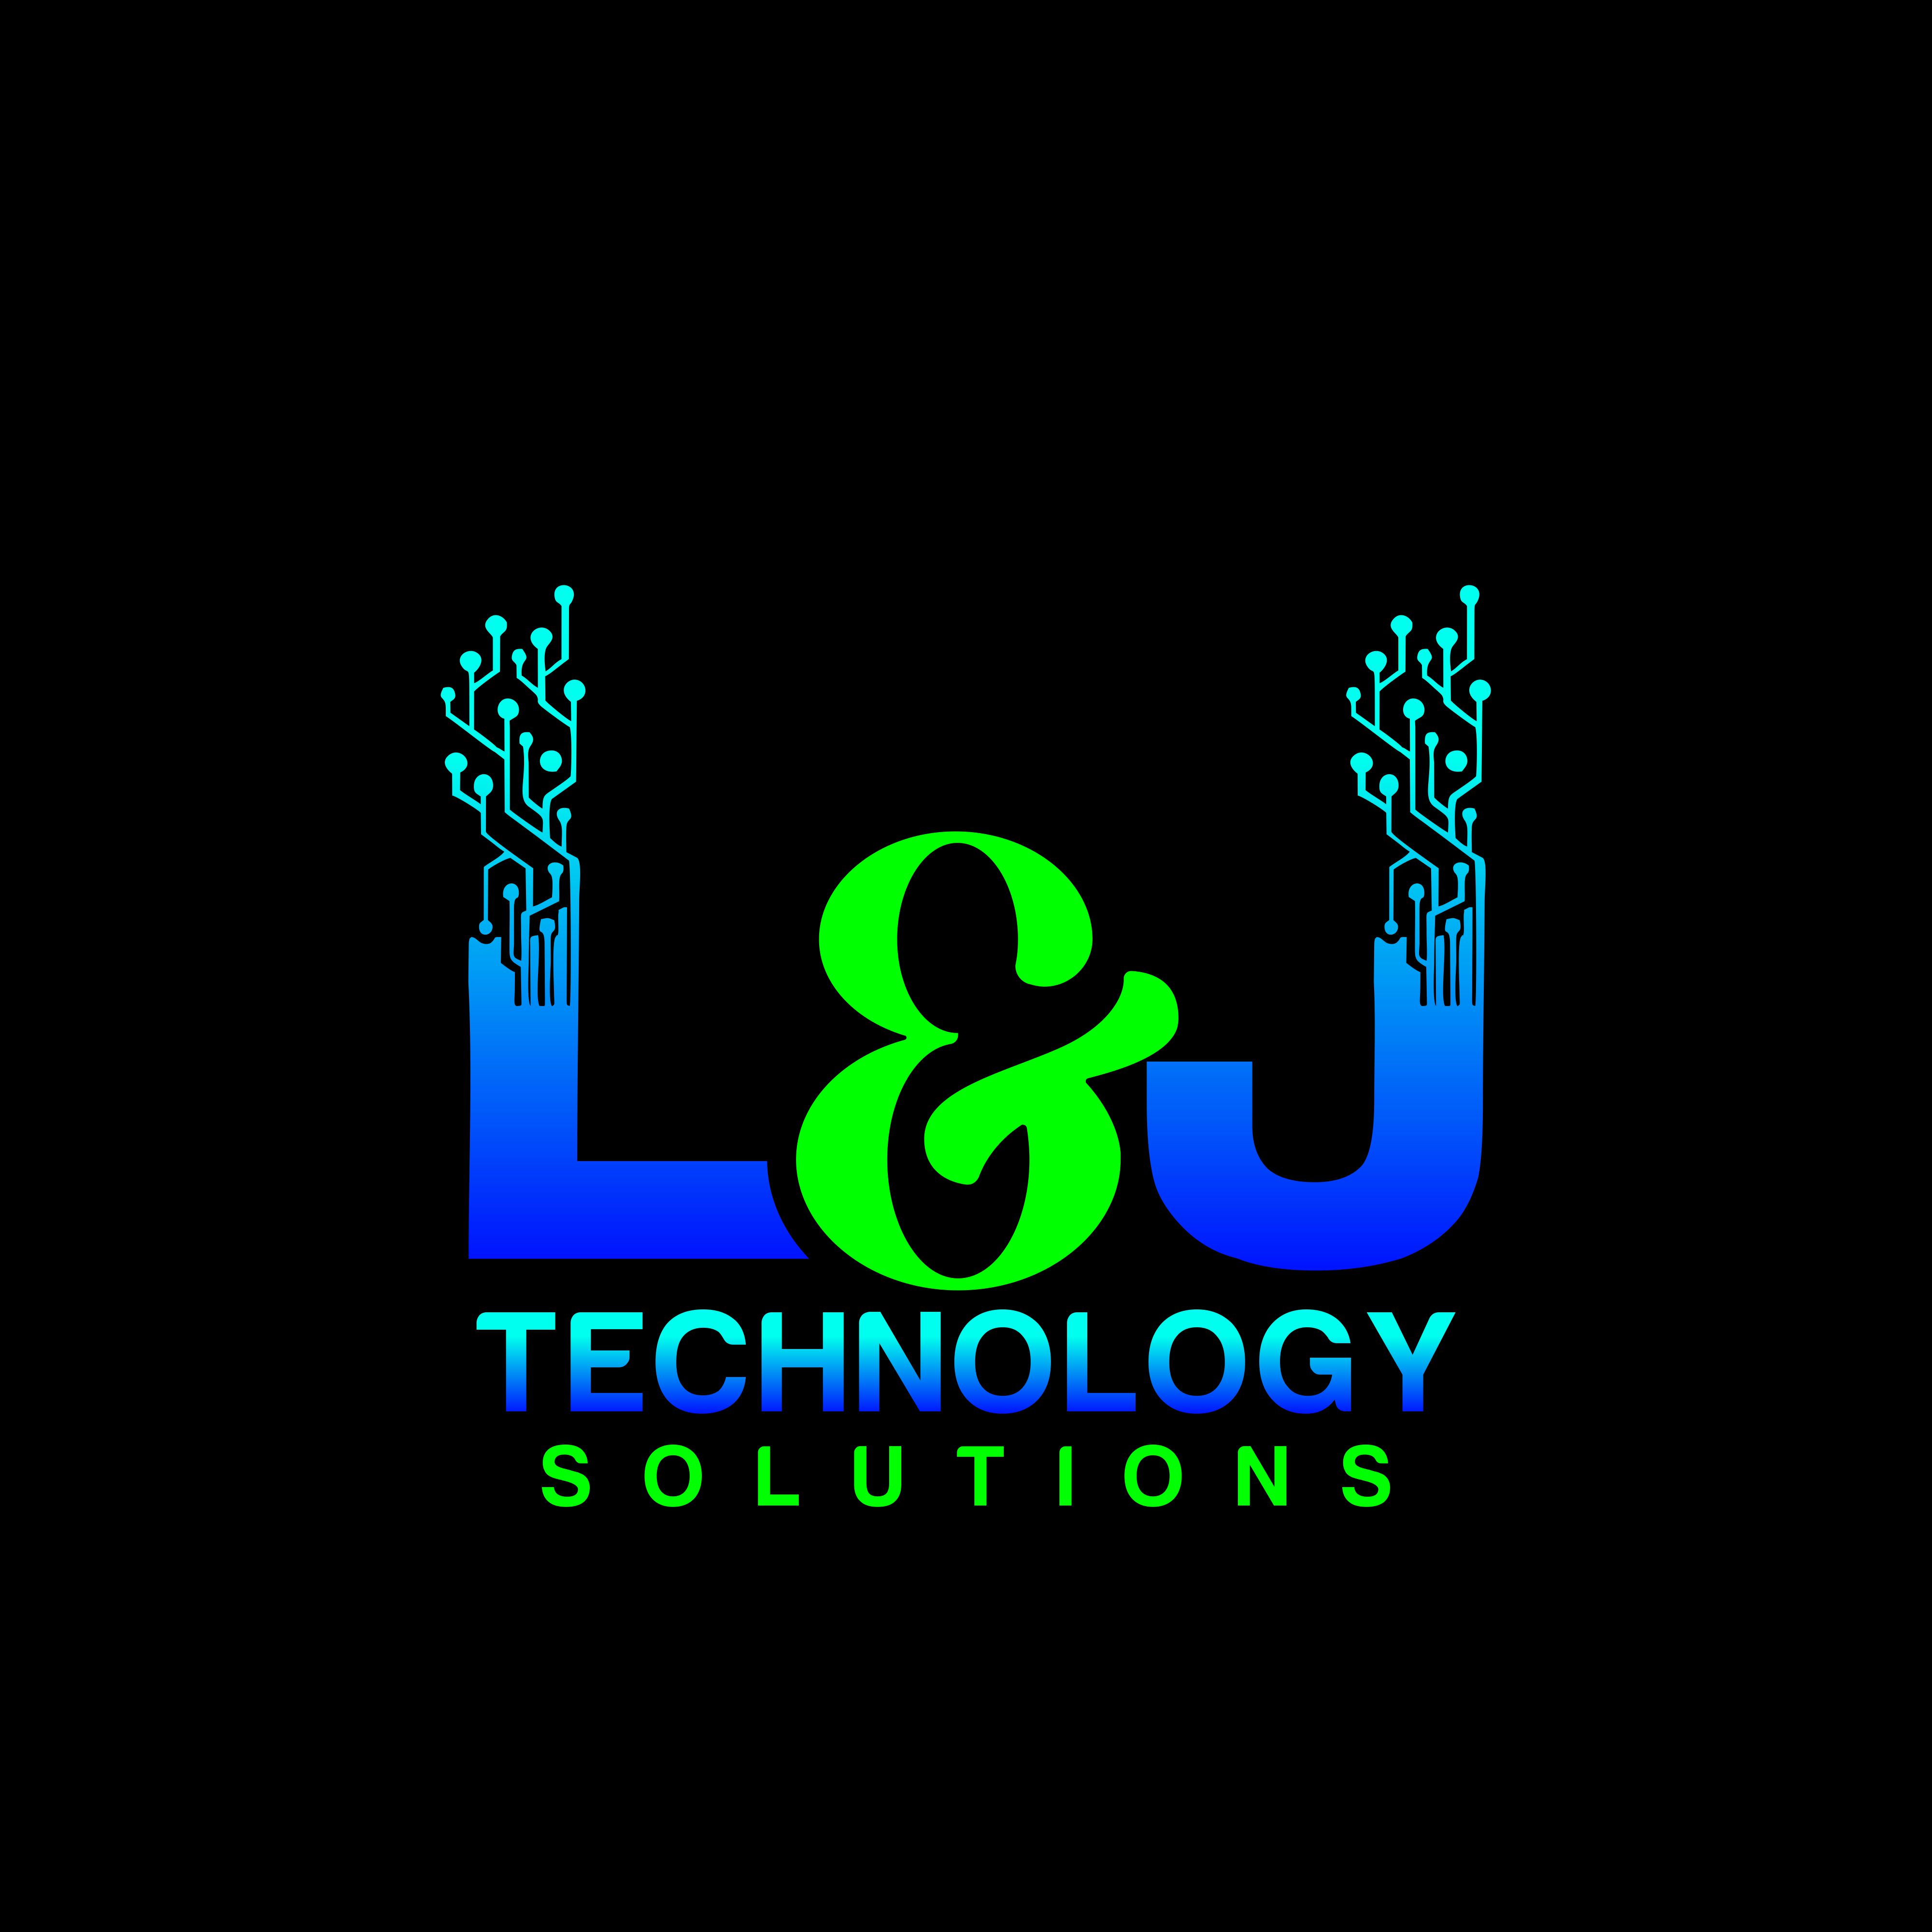 L&J Technology Solutions